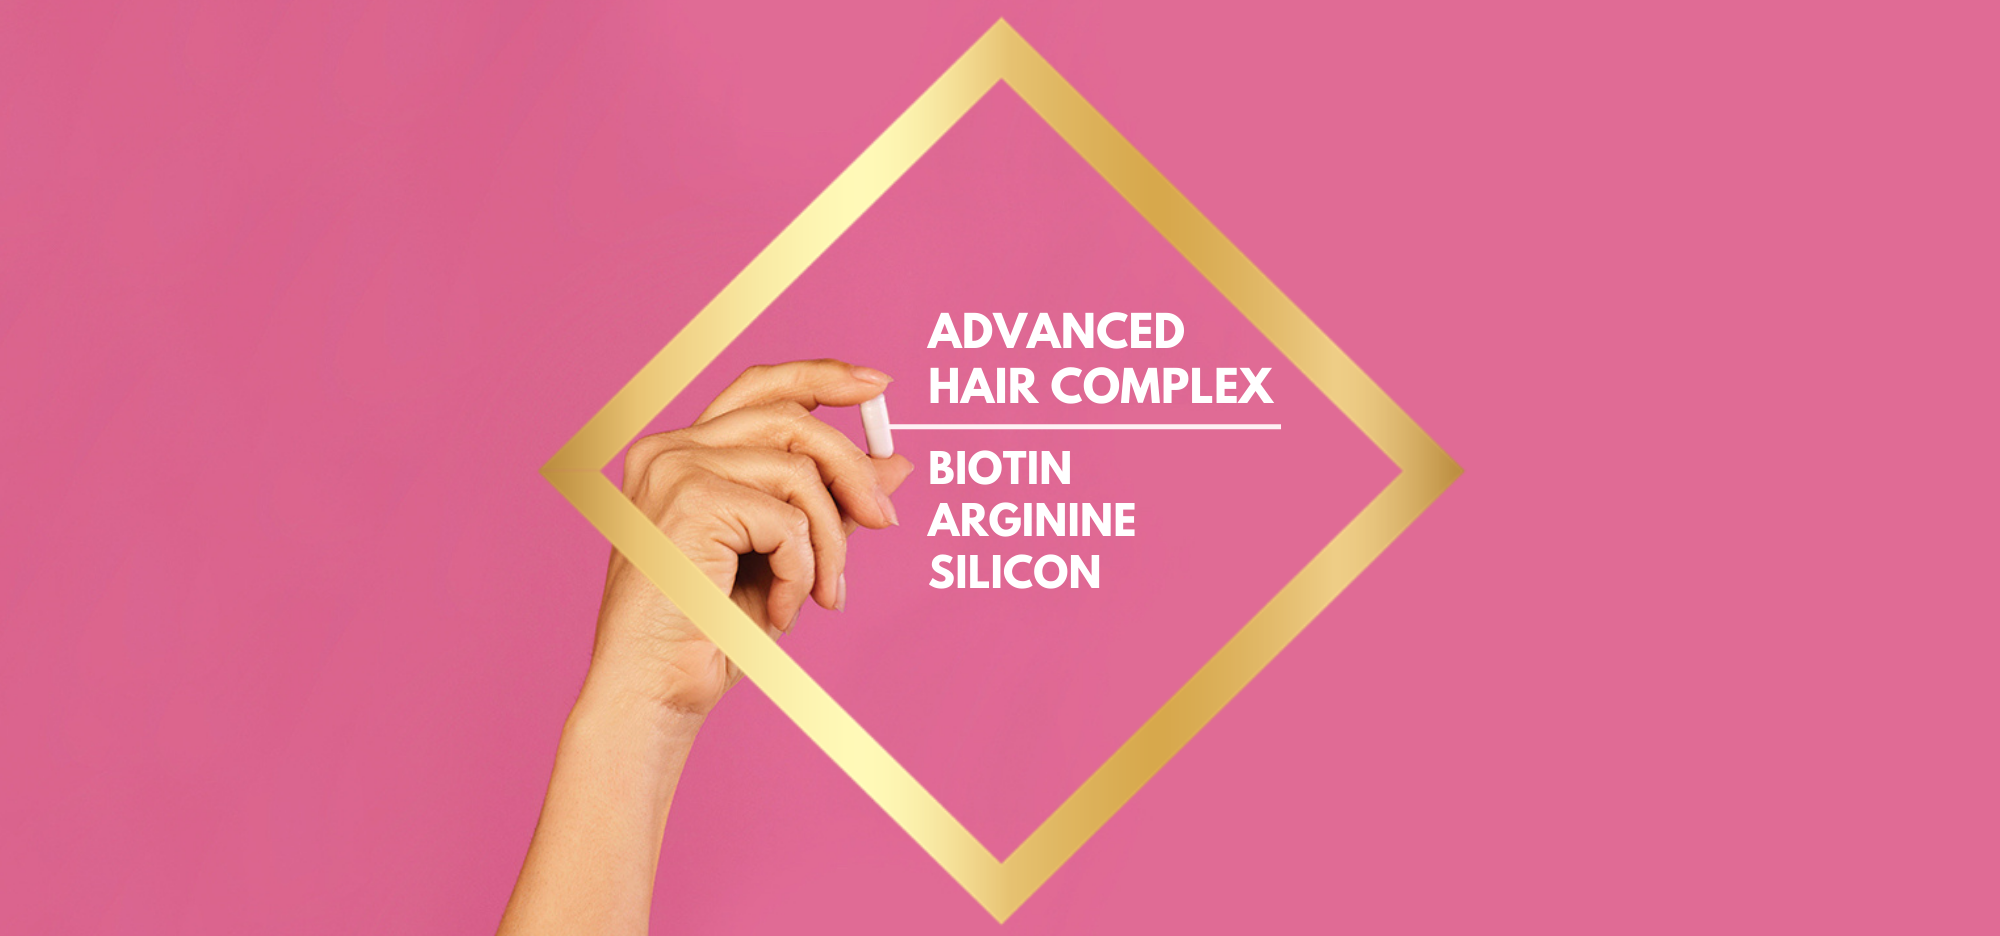 Advanced Hair Complex with Biotin, Arginine, and Silicon